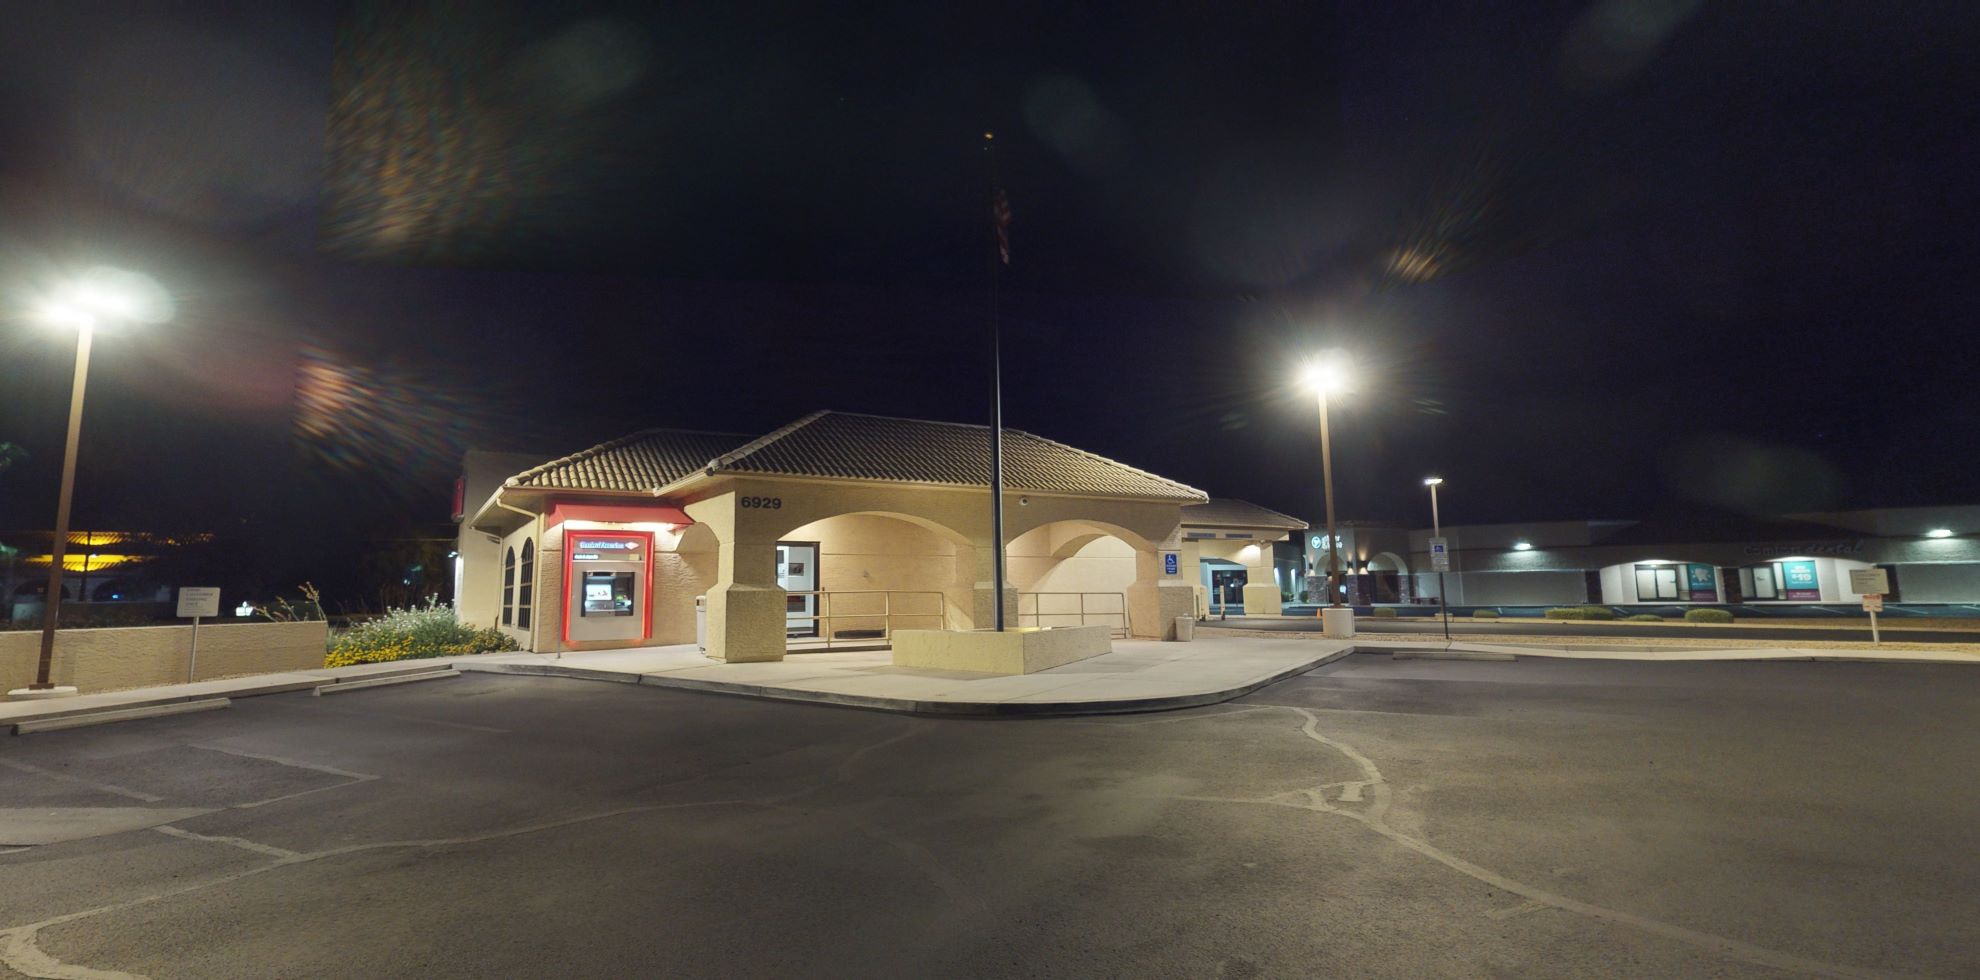 Bank of America financial center with drive-thru ATM | 6929 E Shea Blvd, Scottsdale, AZ 85254